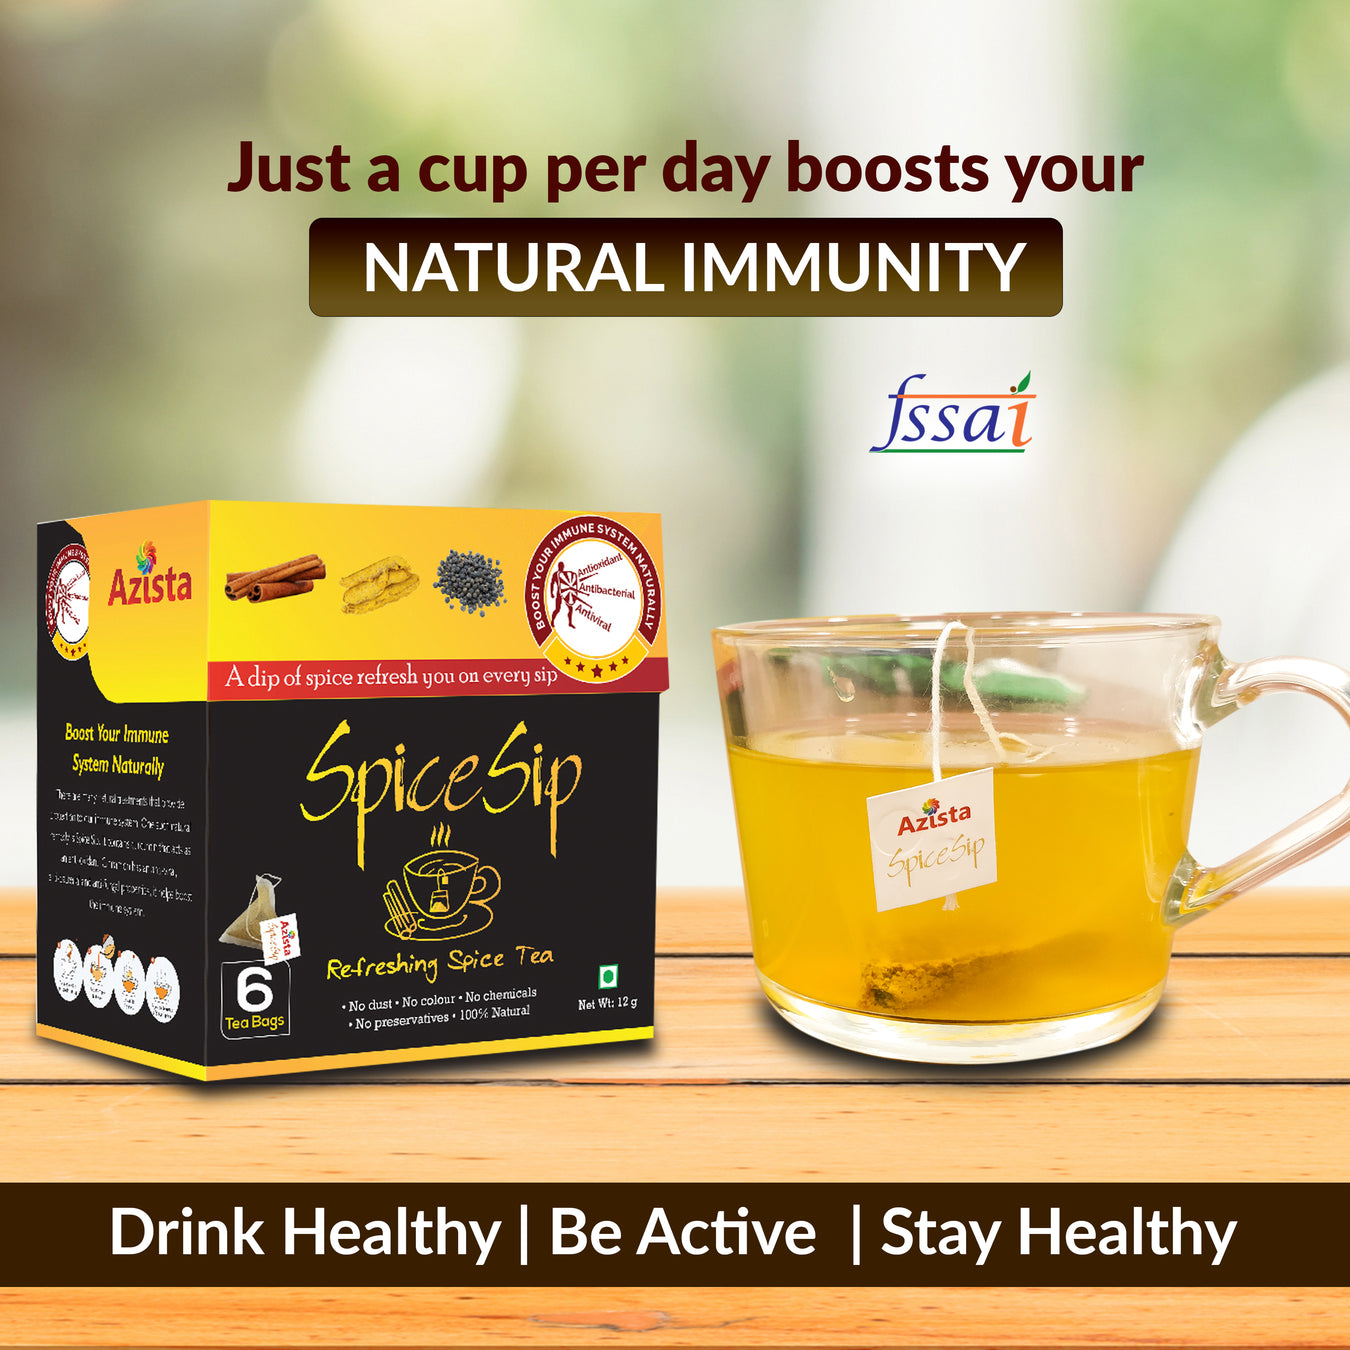 Spice Sip - Tea for Immune System